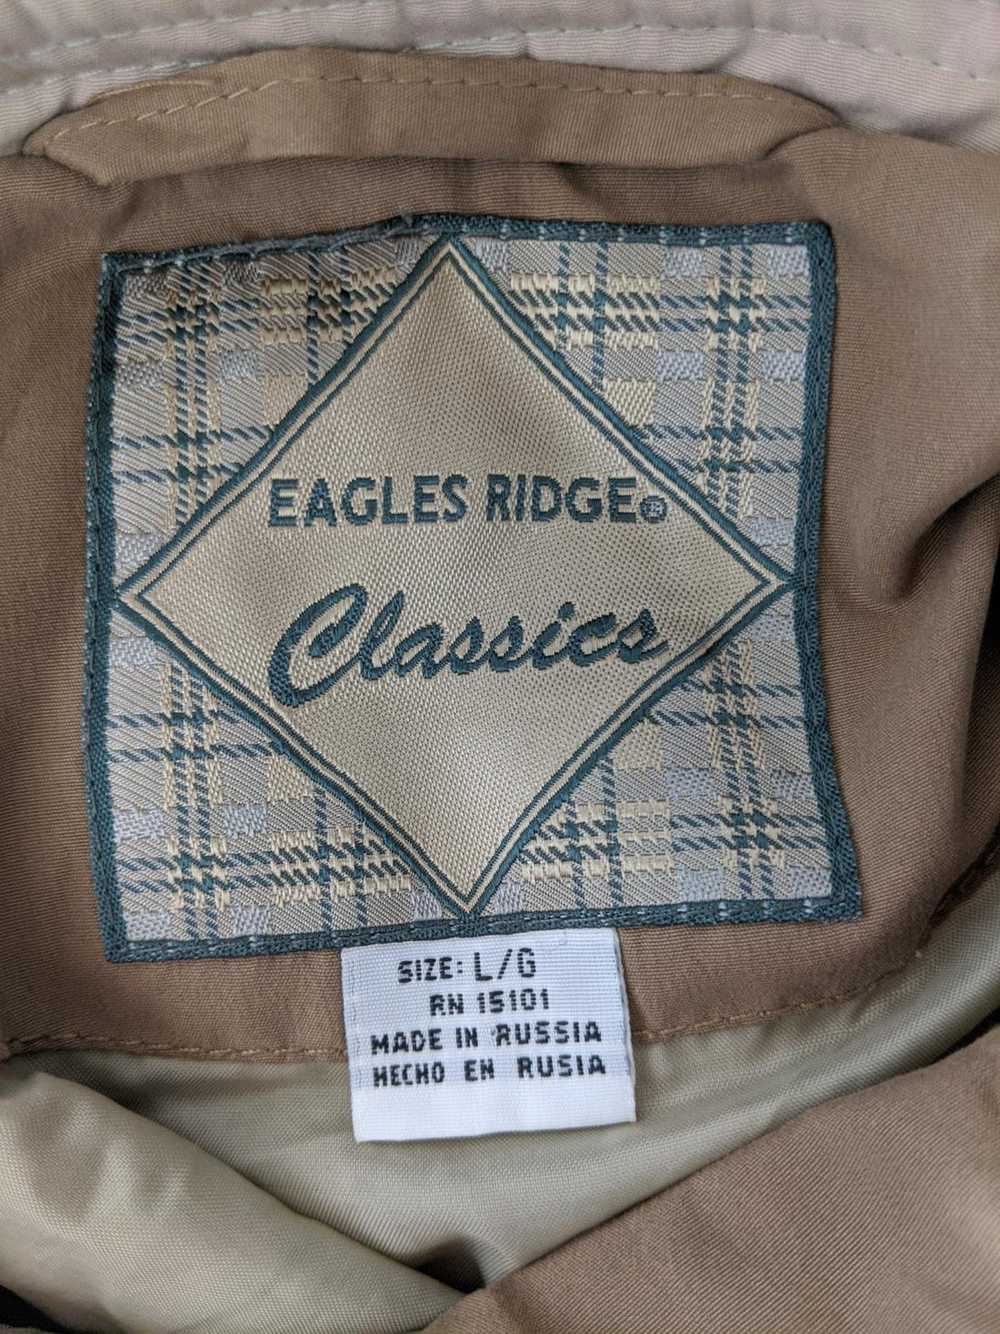 Eagles Ridge Classics Bomber Jacket - image 3